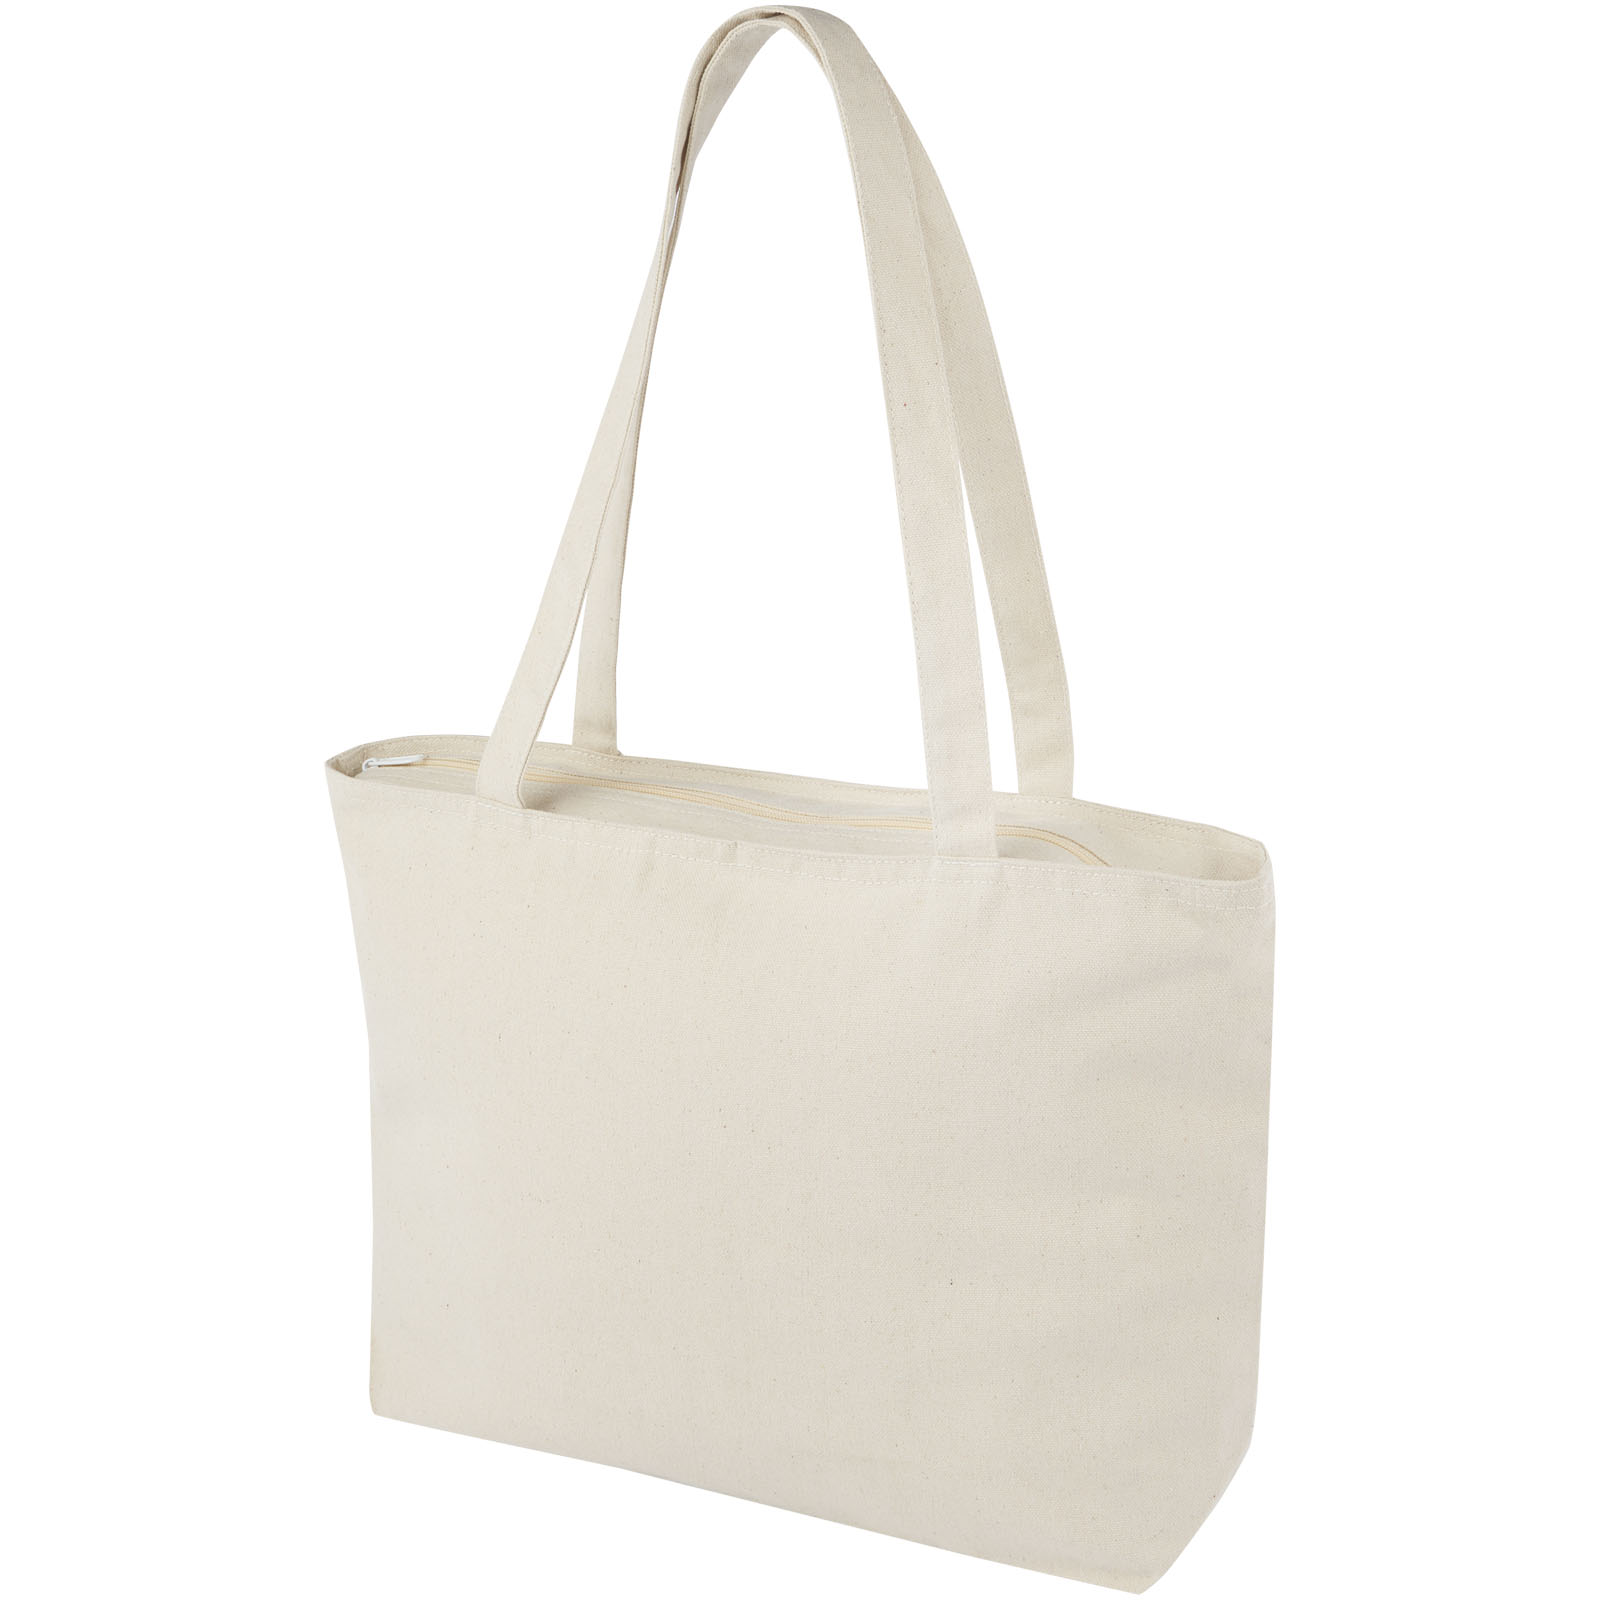 Cotton Bags - Ningbo 320 g/m² zippered cotton tote bag 15L